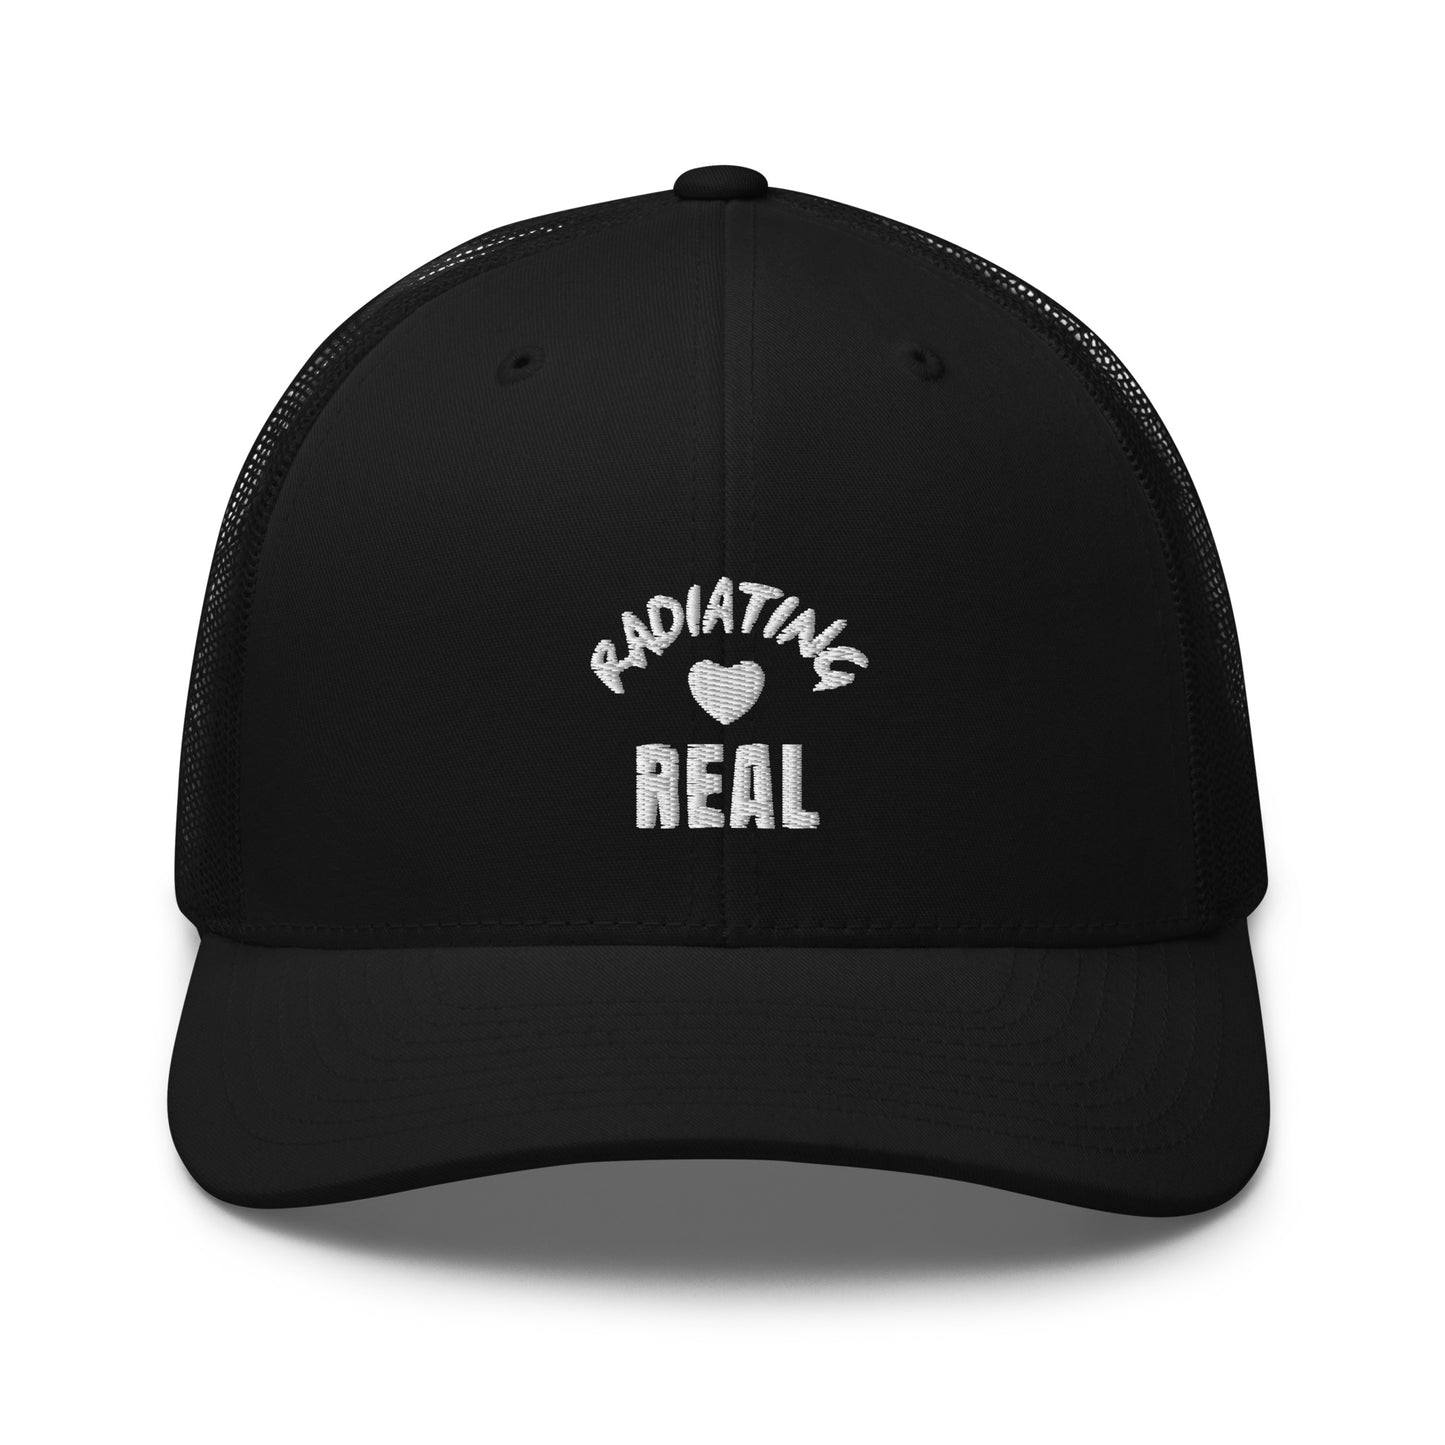 Radiating Real Trucker Hat